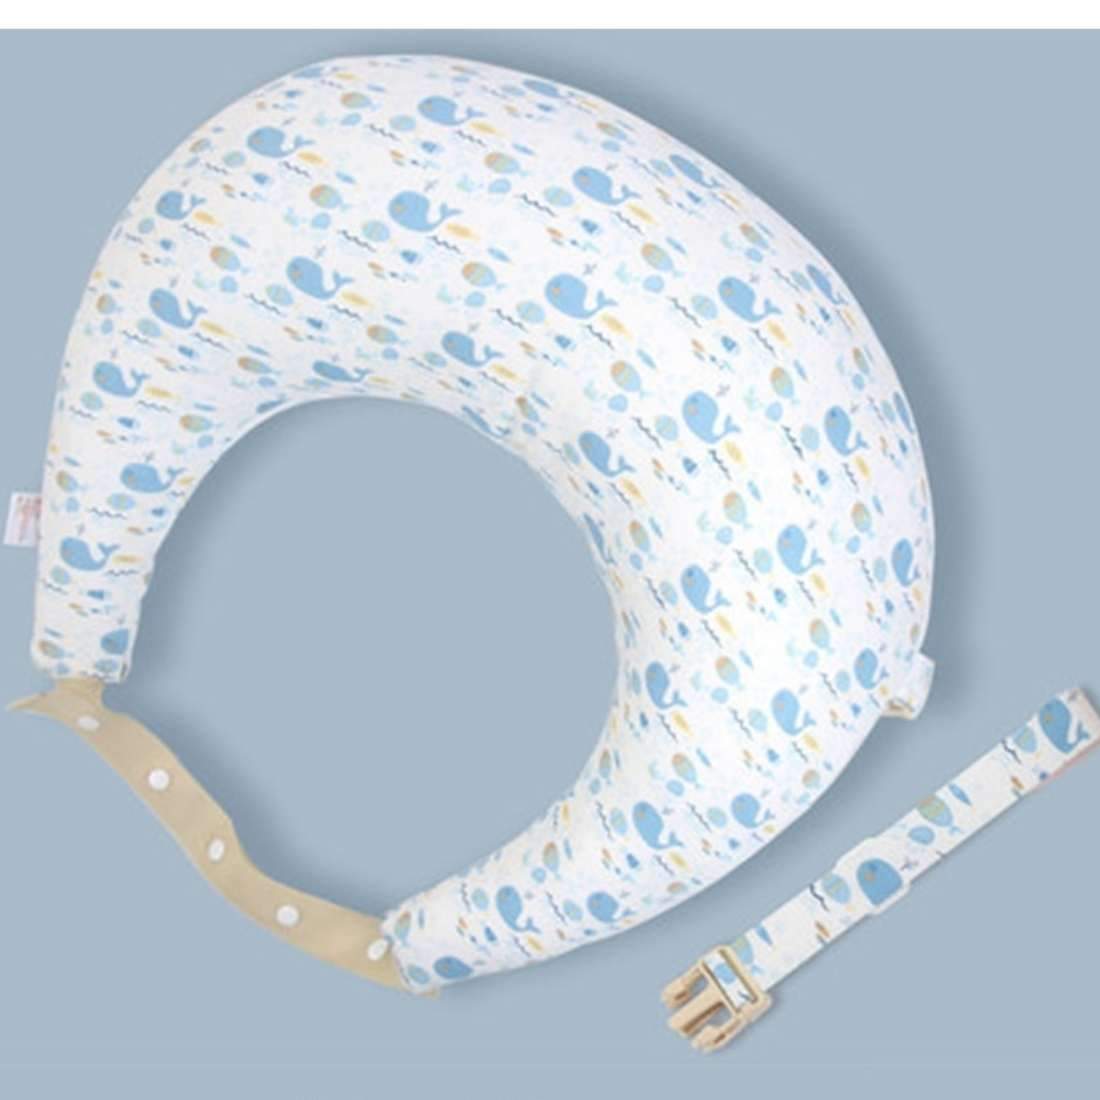 Multifunctional Nursing Pillow + Neck Strap - Pink & Blue Baby Shop - Review